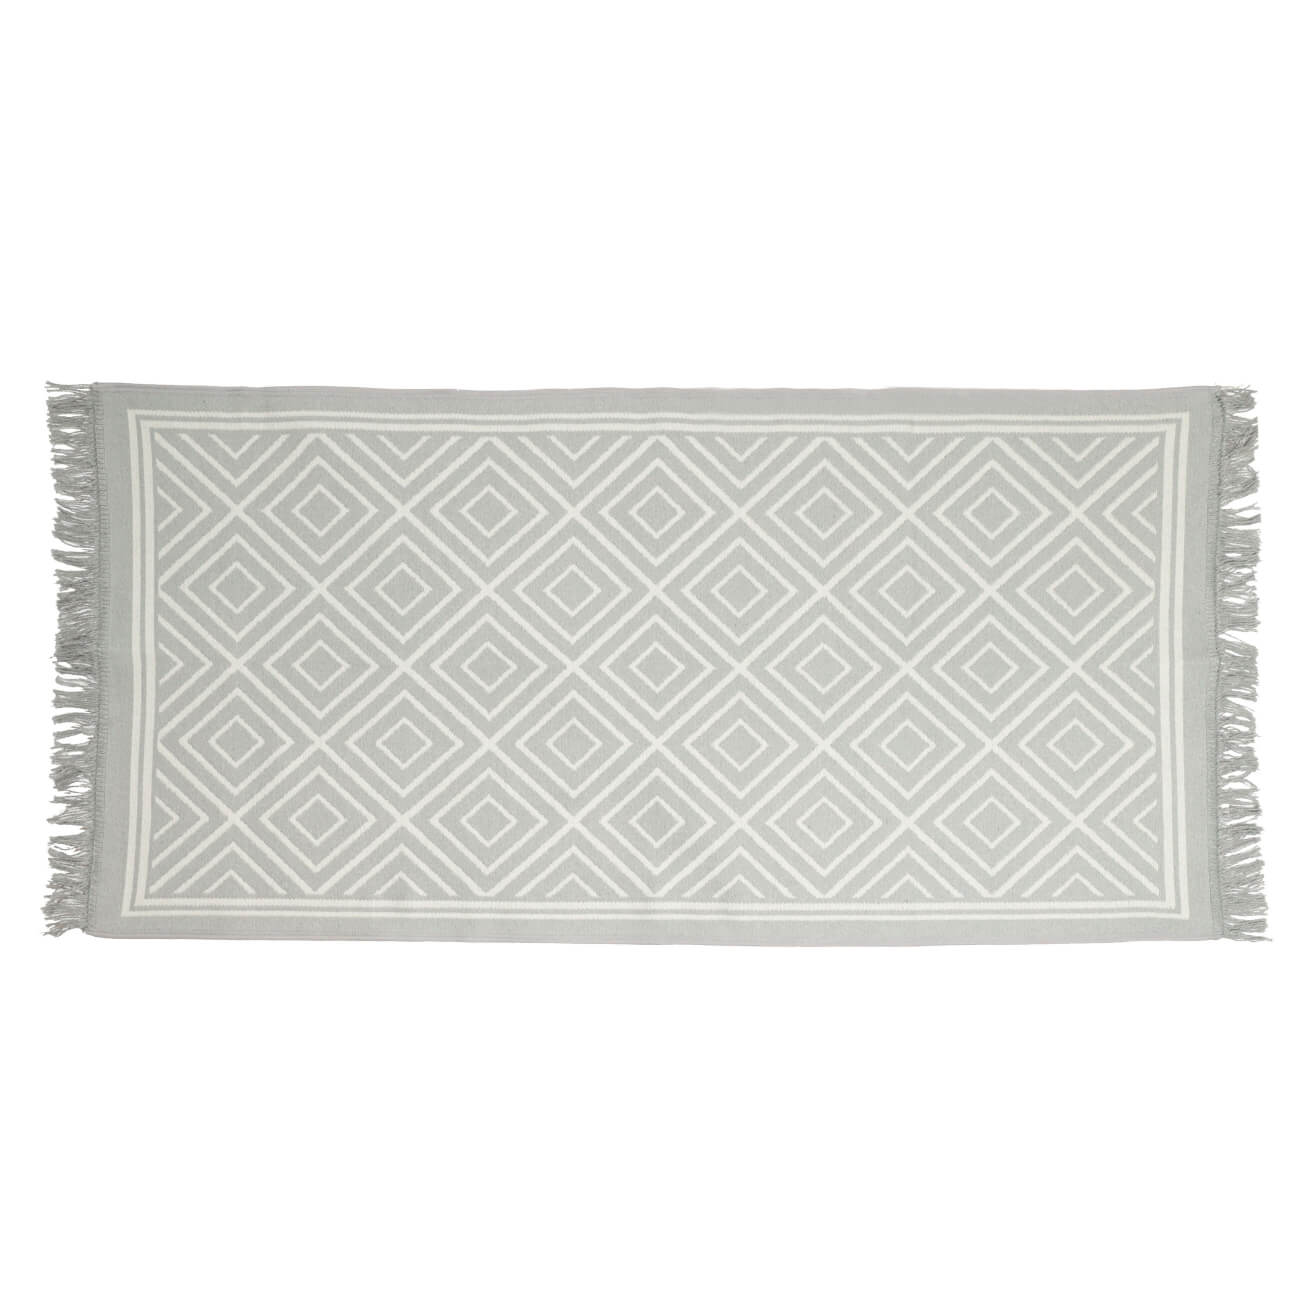 коврик ctim килим 80х150 см акрил коричневый 1914 d Коврик, 80х150 см, двусторонний, с бахромой, акрил, бело-серый, Узор, Carpet